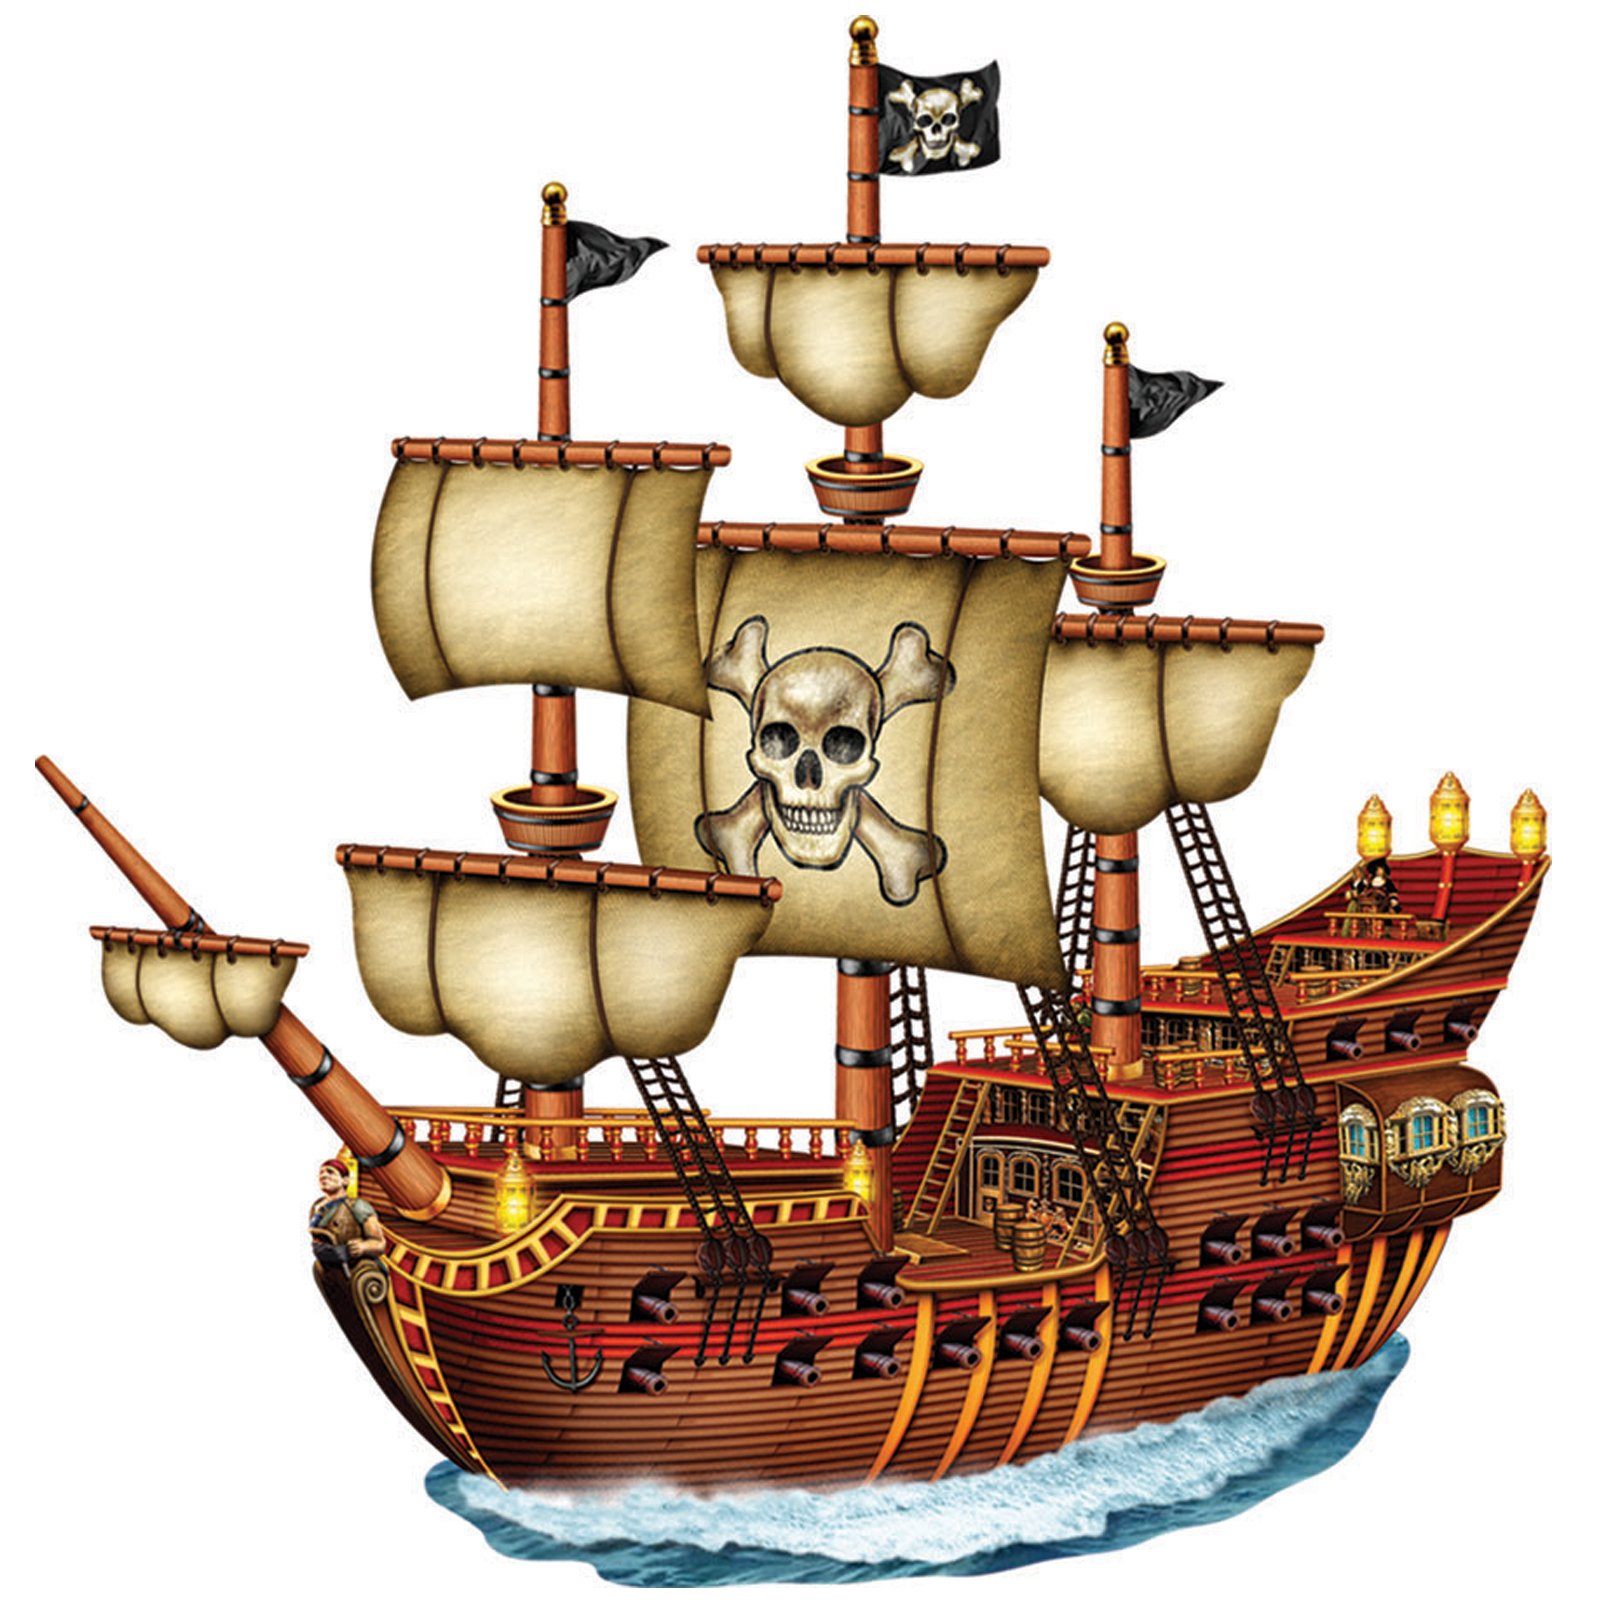 Free Pirate Ship Clipart, Download Free Clip Art, Free Clip.